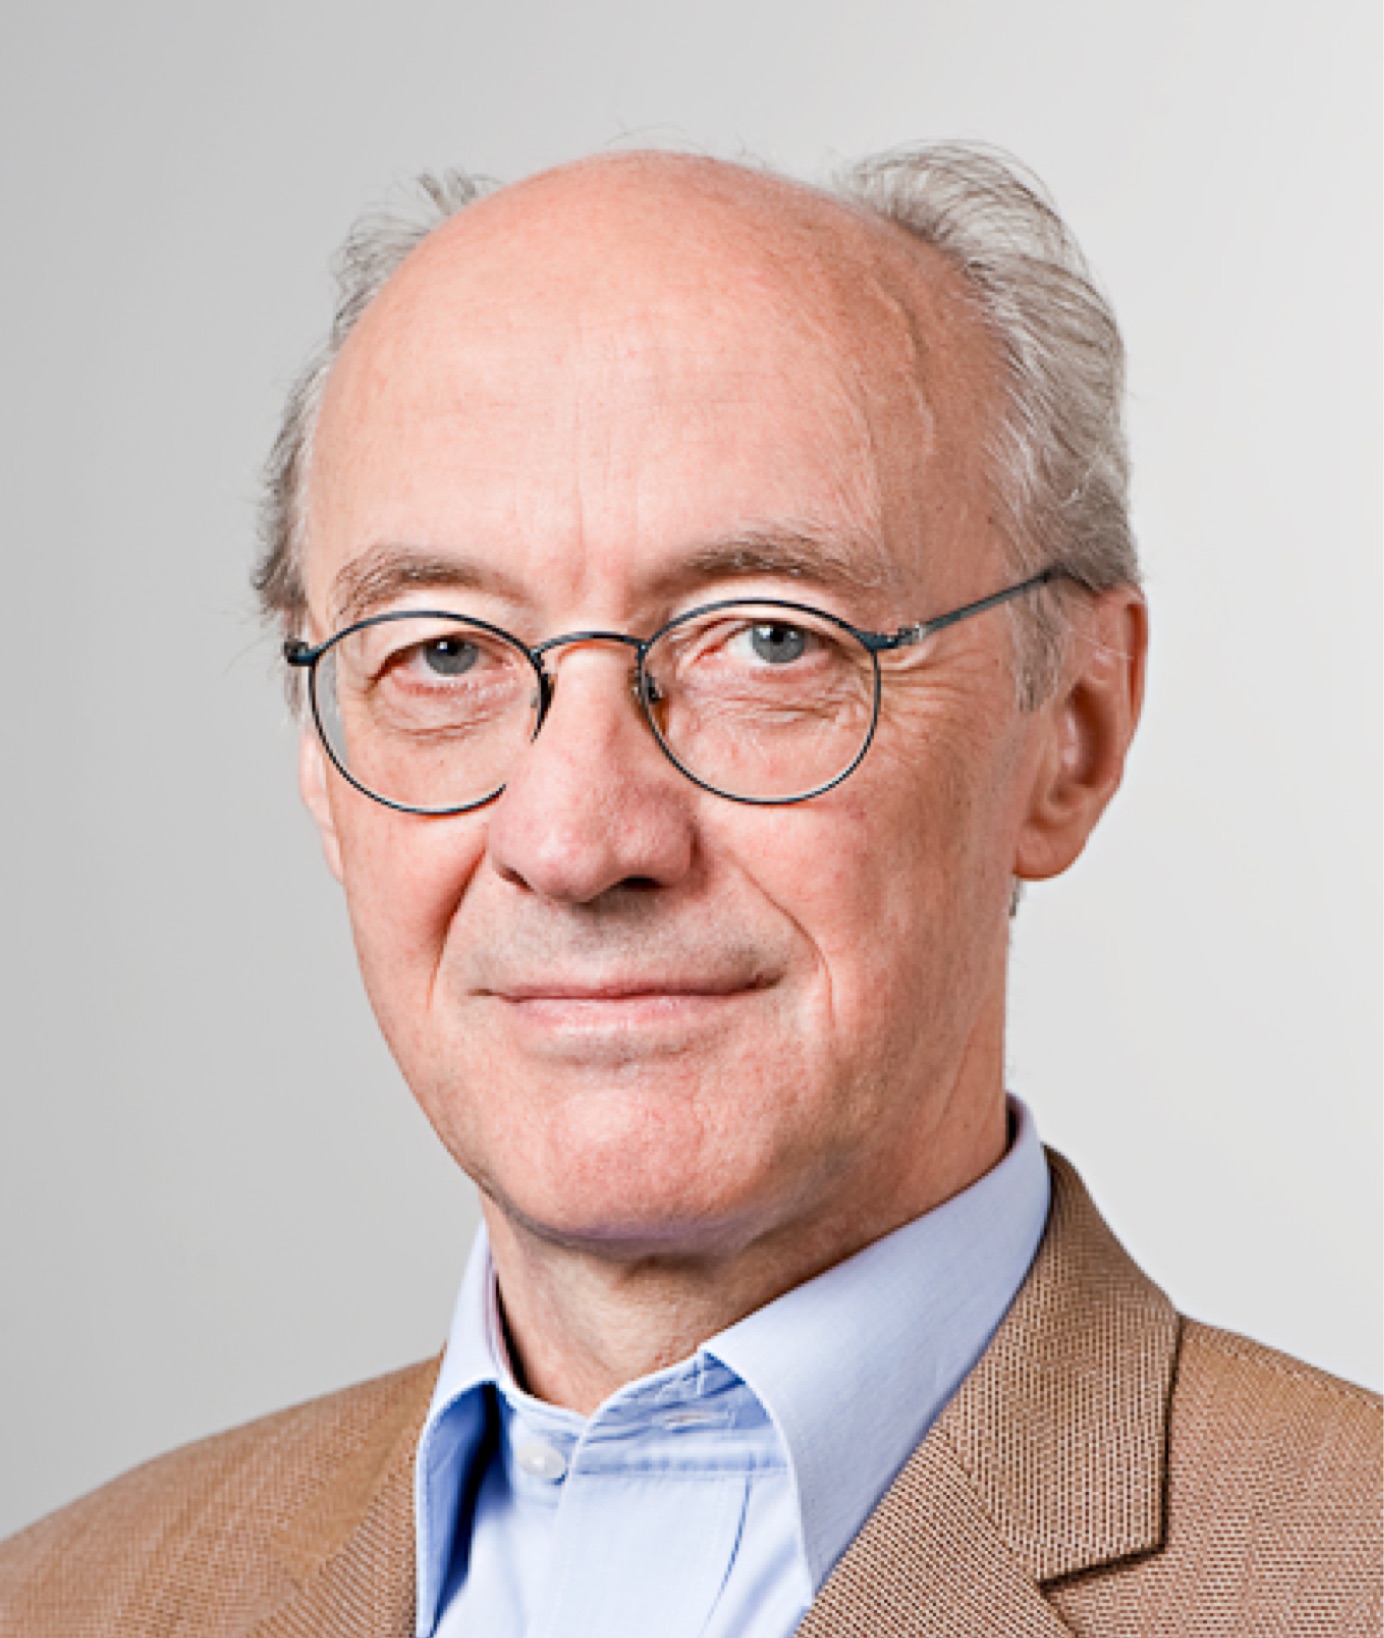 TUM Alumnus Prof. Winfried Nerdinger.